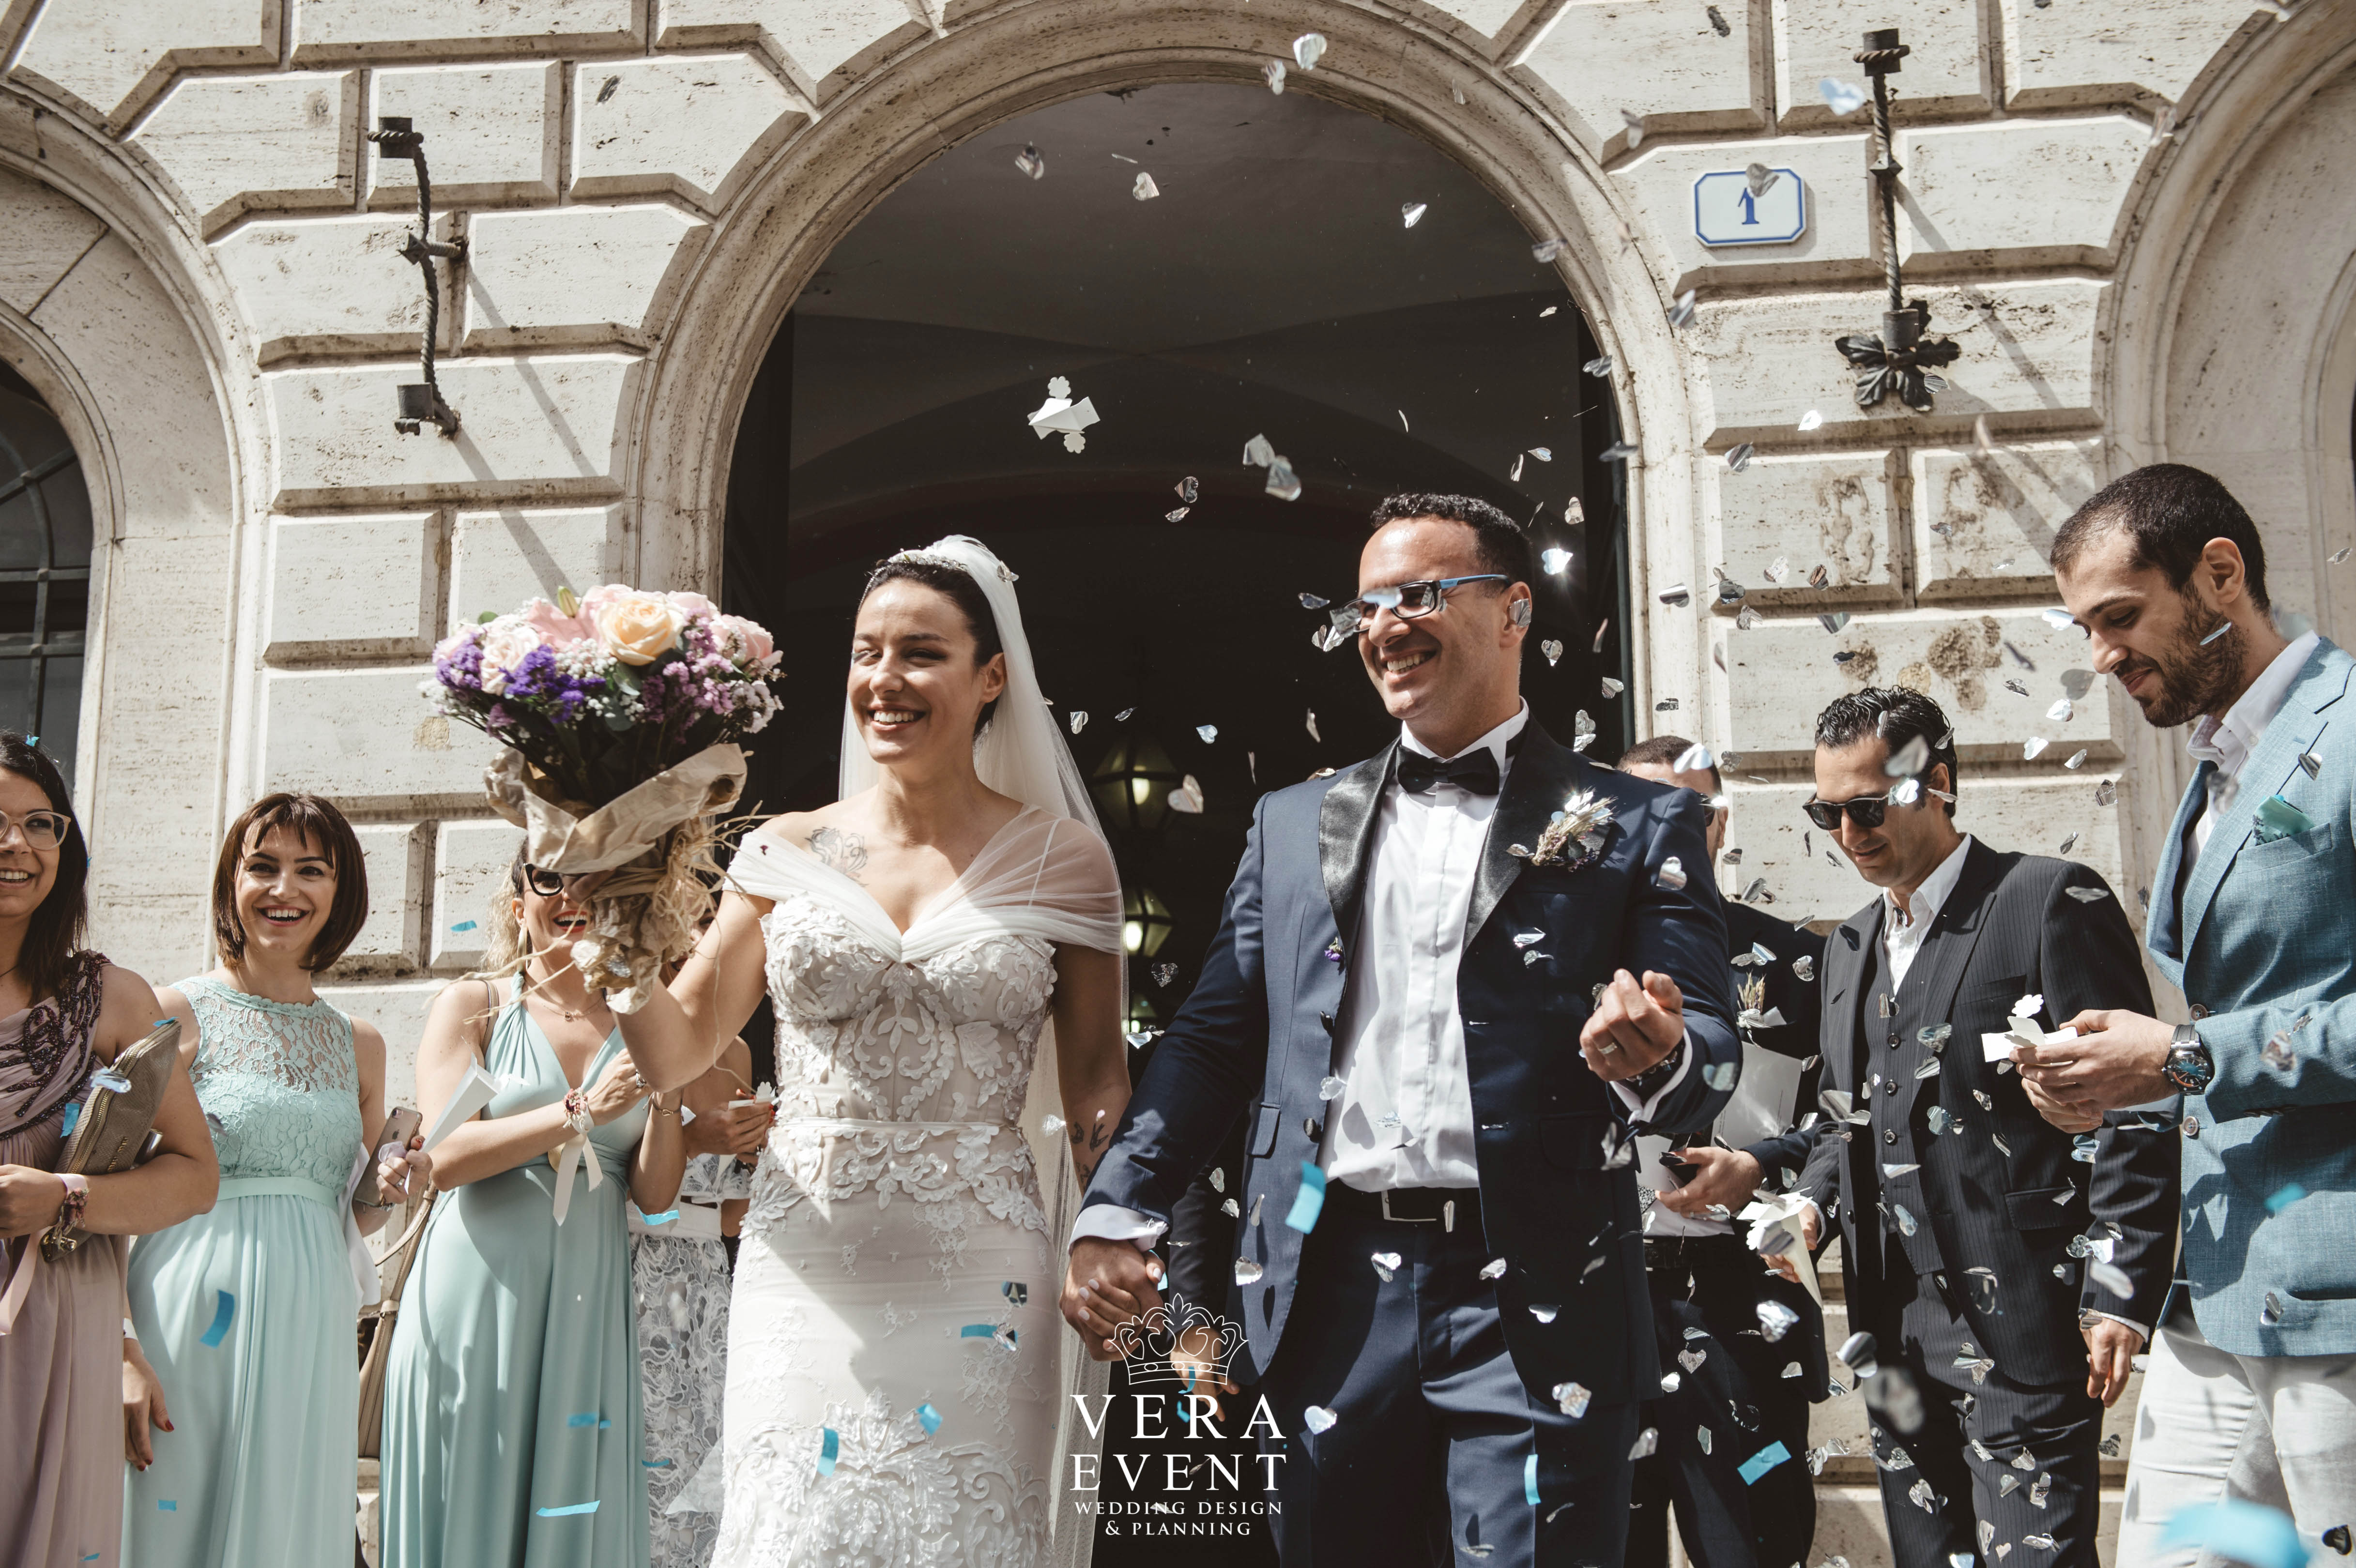 Funda & Sertan #weddingsinitaly